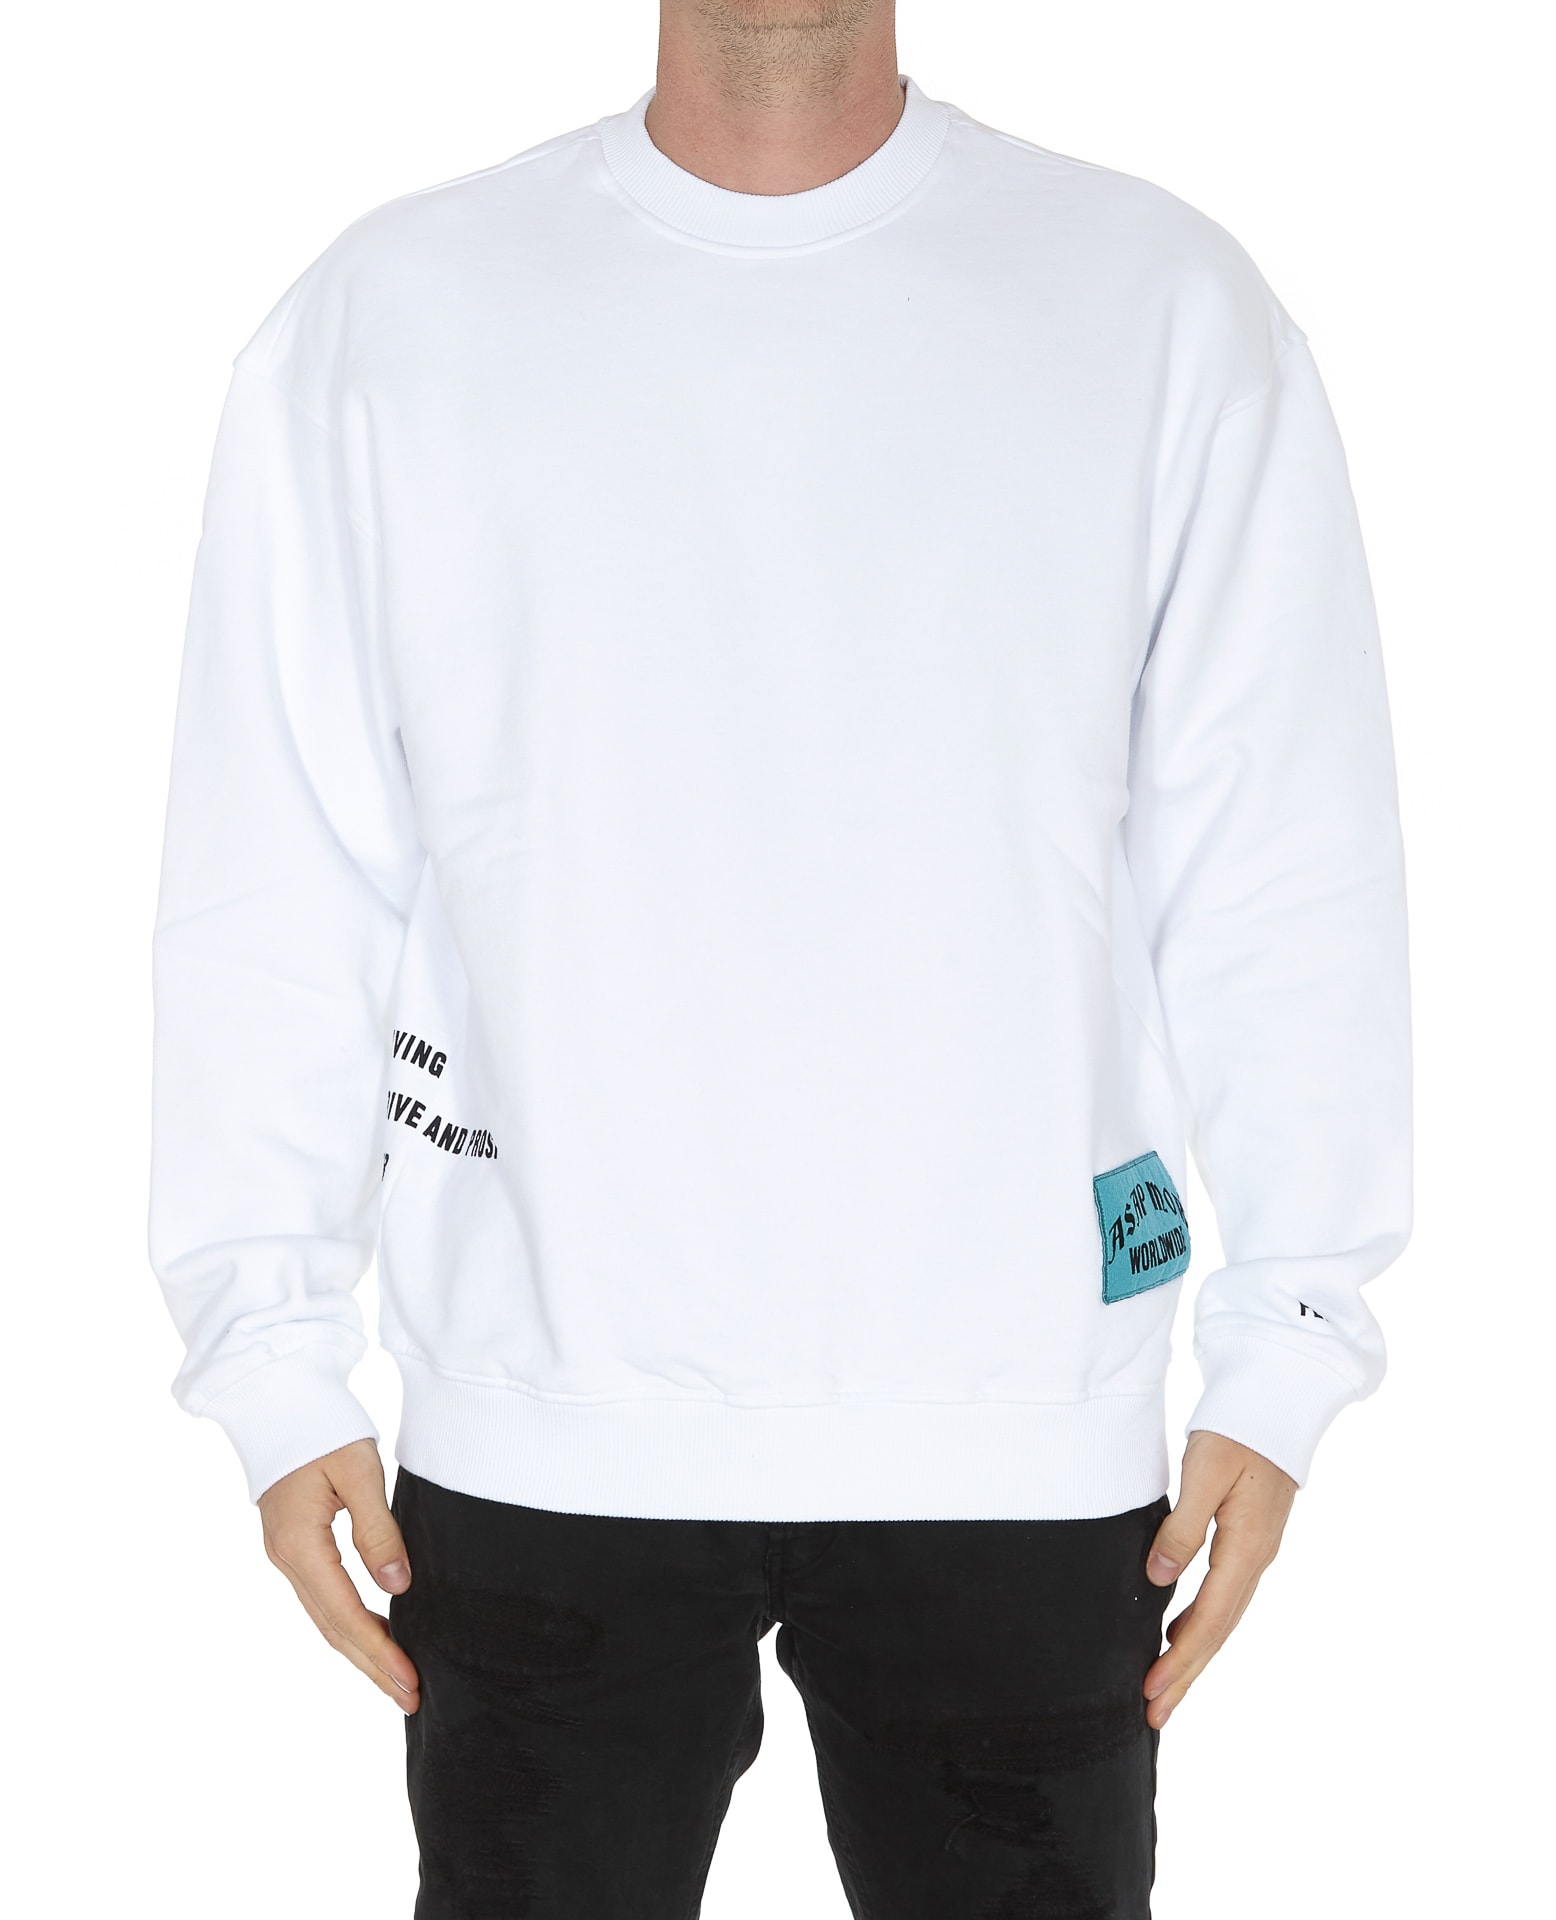 Aap Ferg By Platformx A$ap Ferg By Platformx Sweatshirt In White